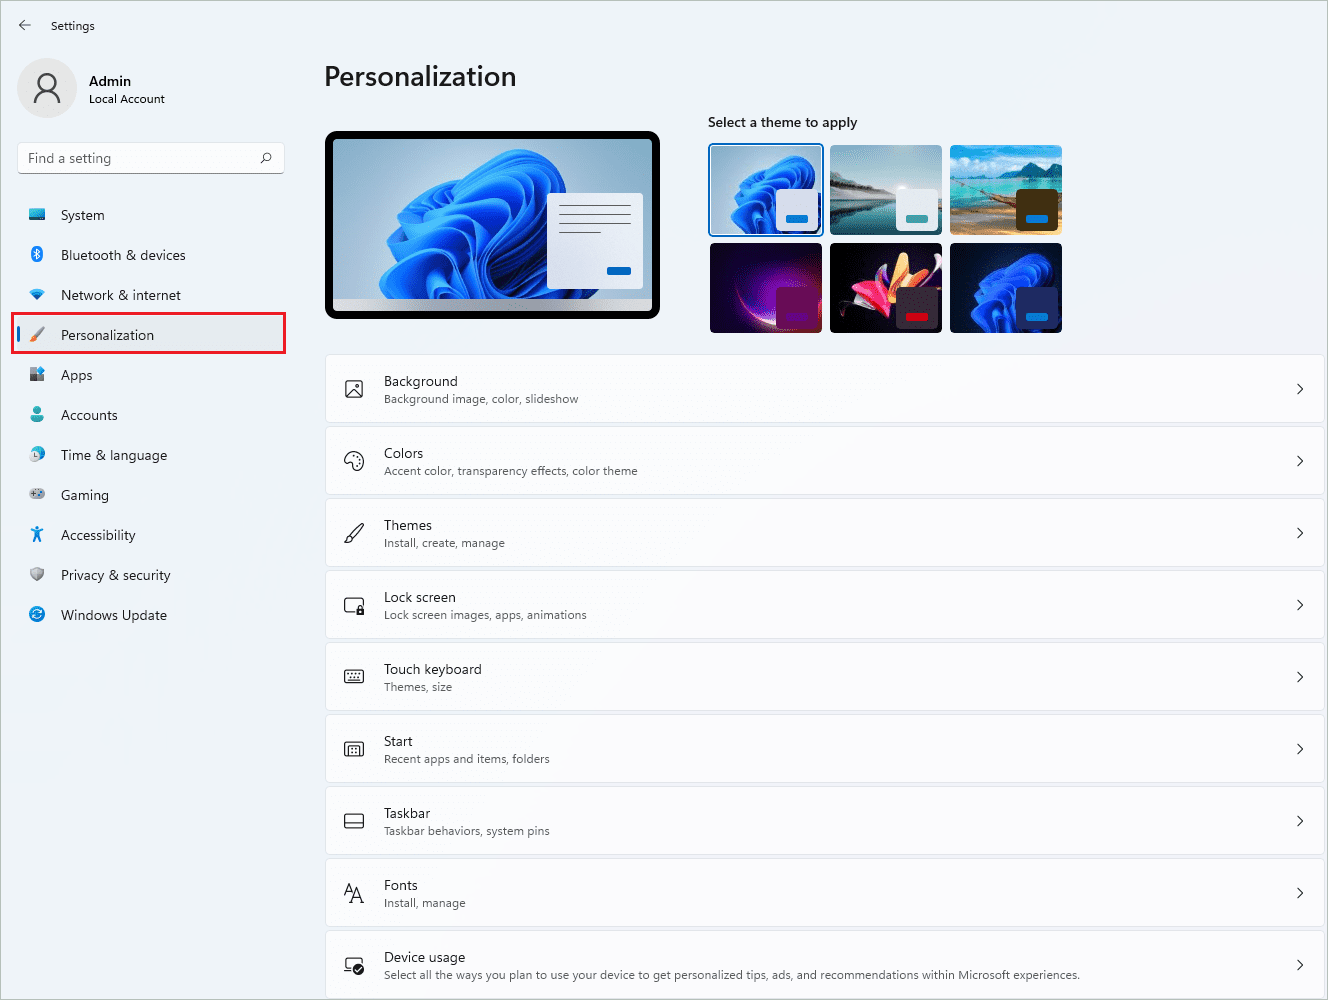 Personalization settings section